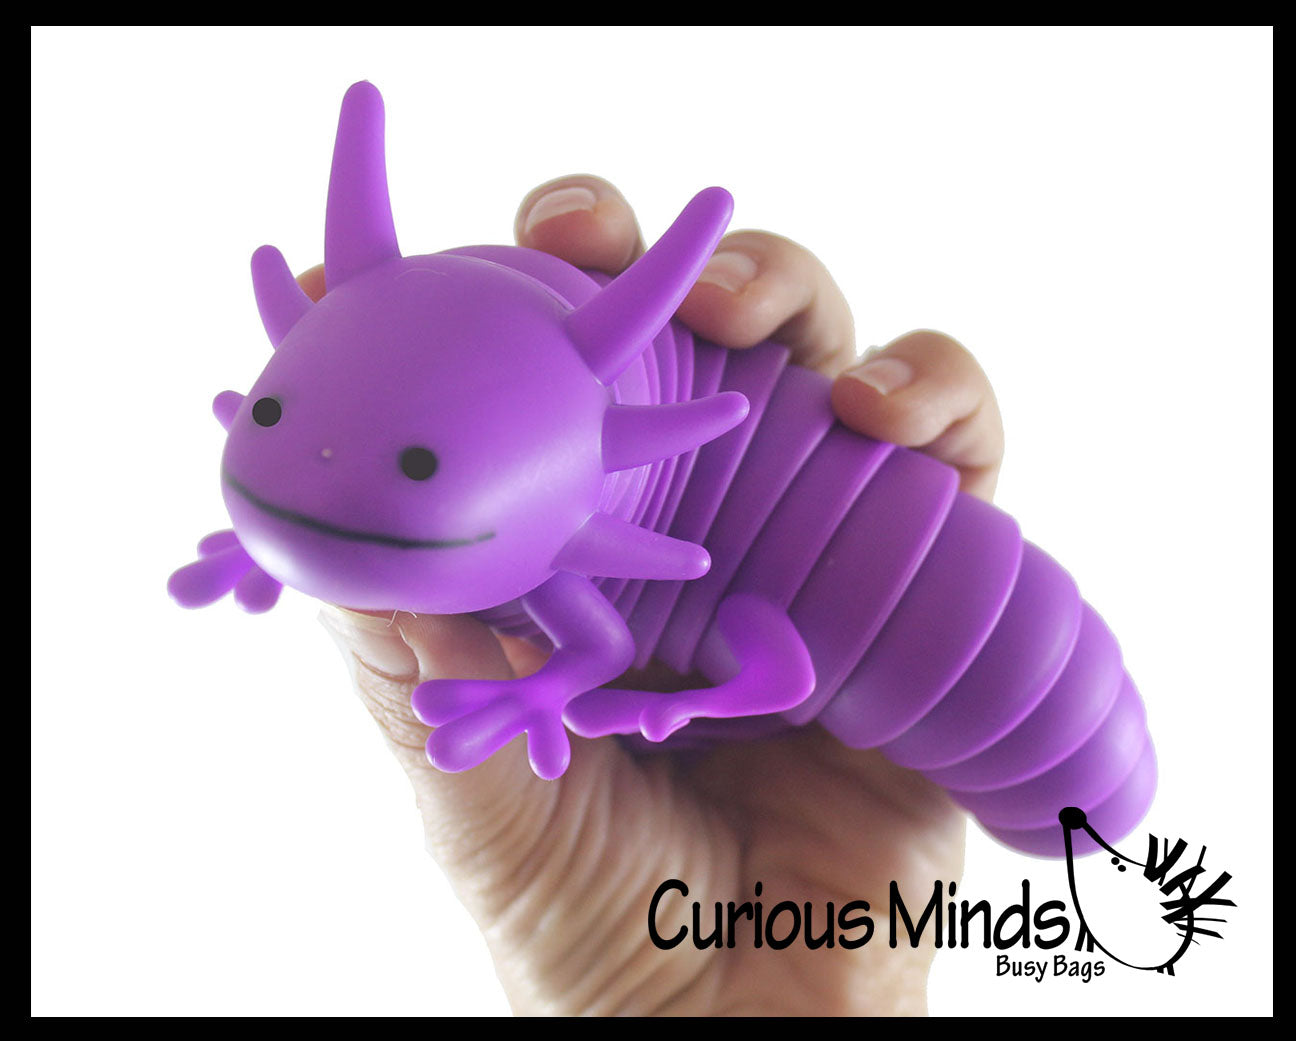 Axolotl Toy, Axolotl Felt, Busy Tin, Axolotl Embroidery, Axolotl Gifts,  Montessori Toys, Travel Toys for Toddlers, Felt Toys for Kids 